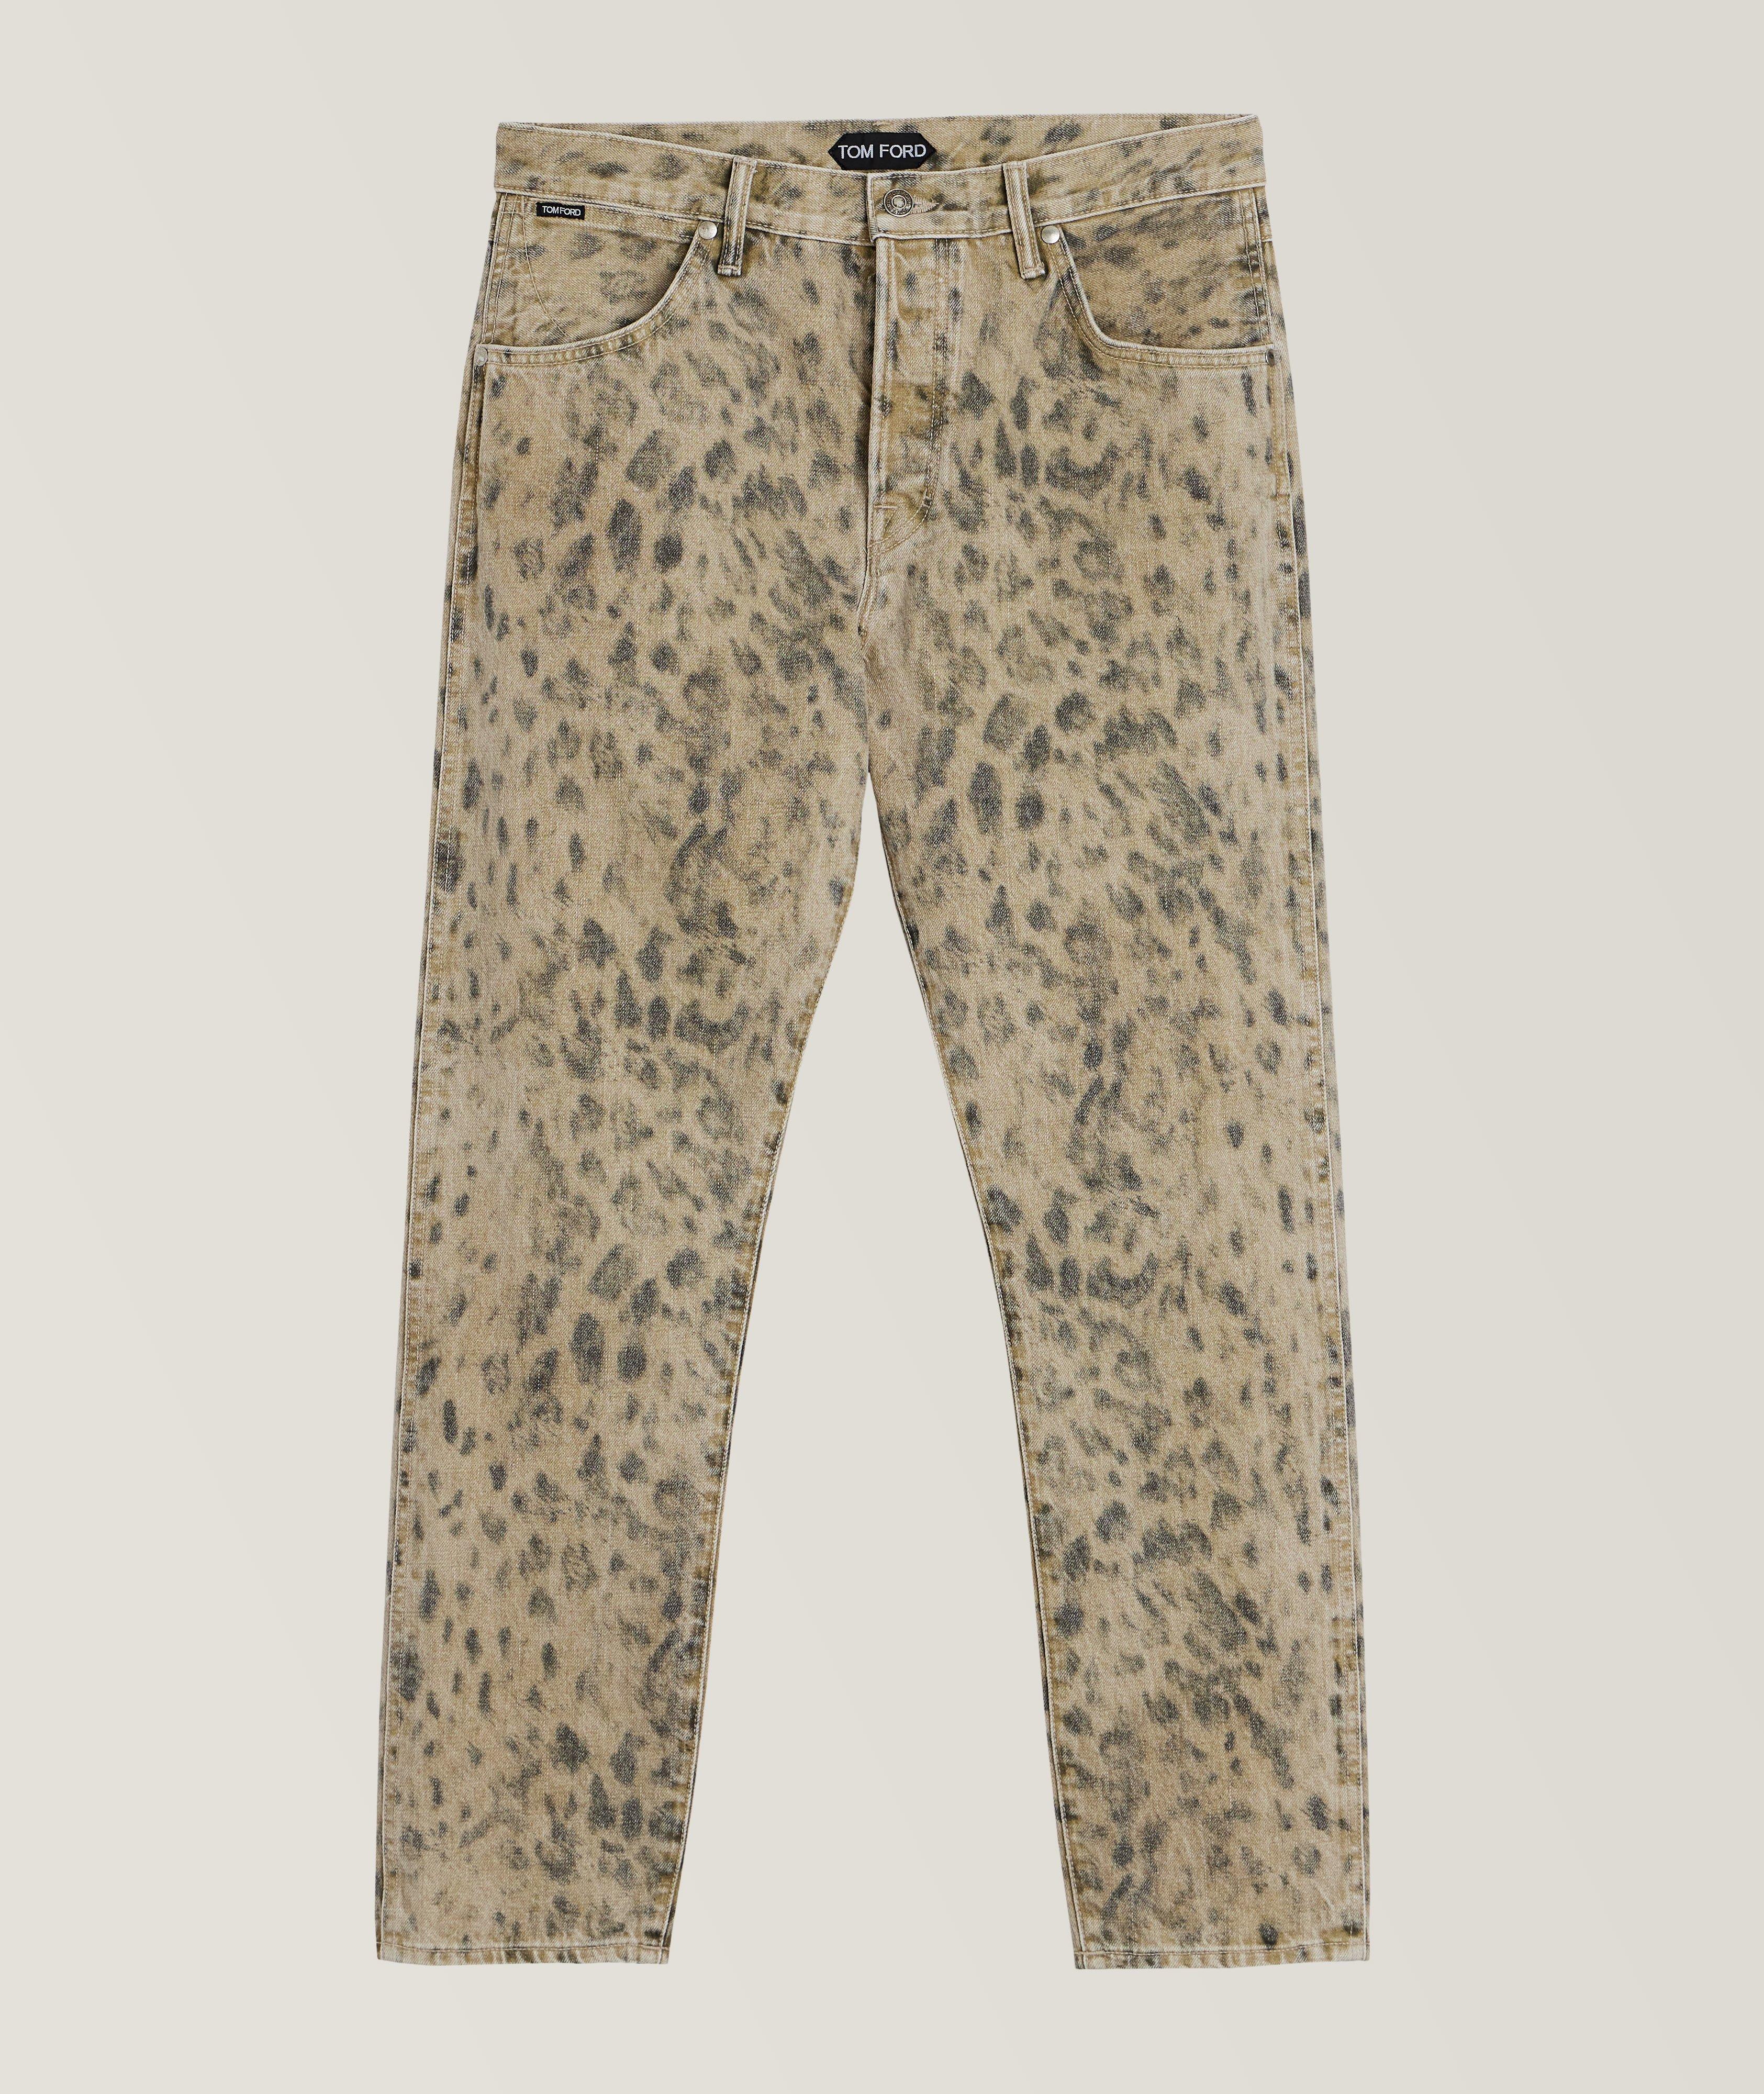 TOM FORD Slim-Fit Distressed Leopard Pattern Cotton Jeans